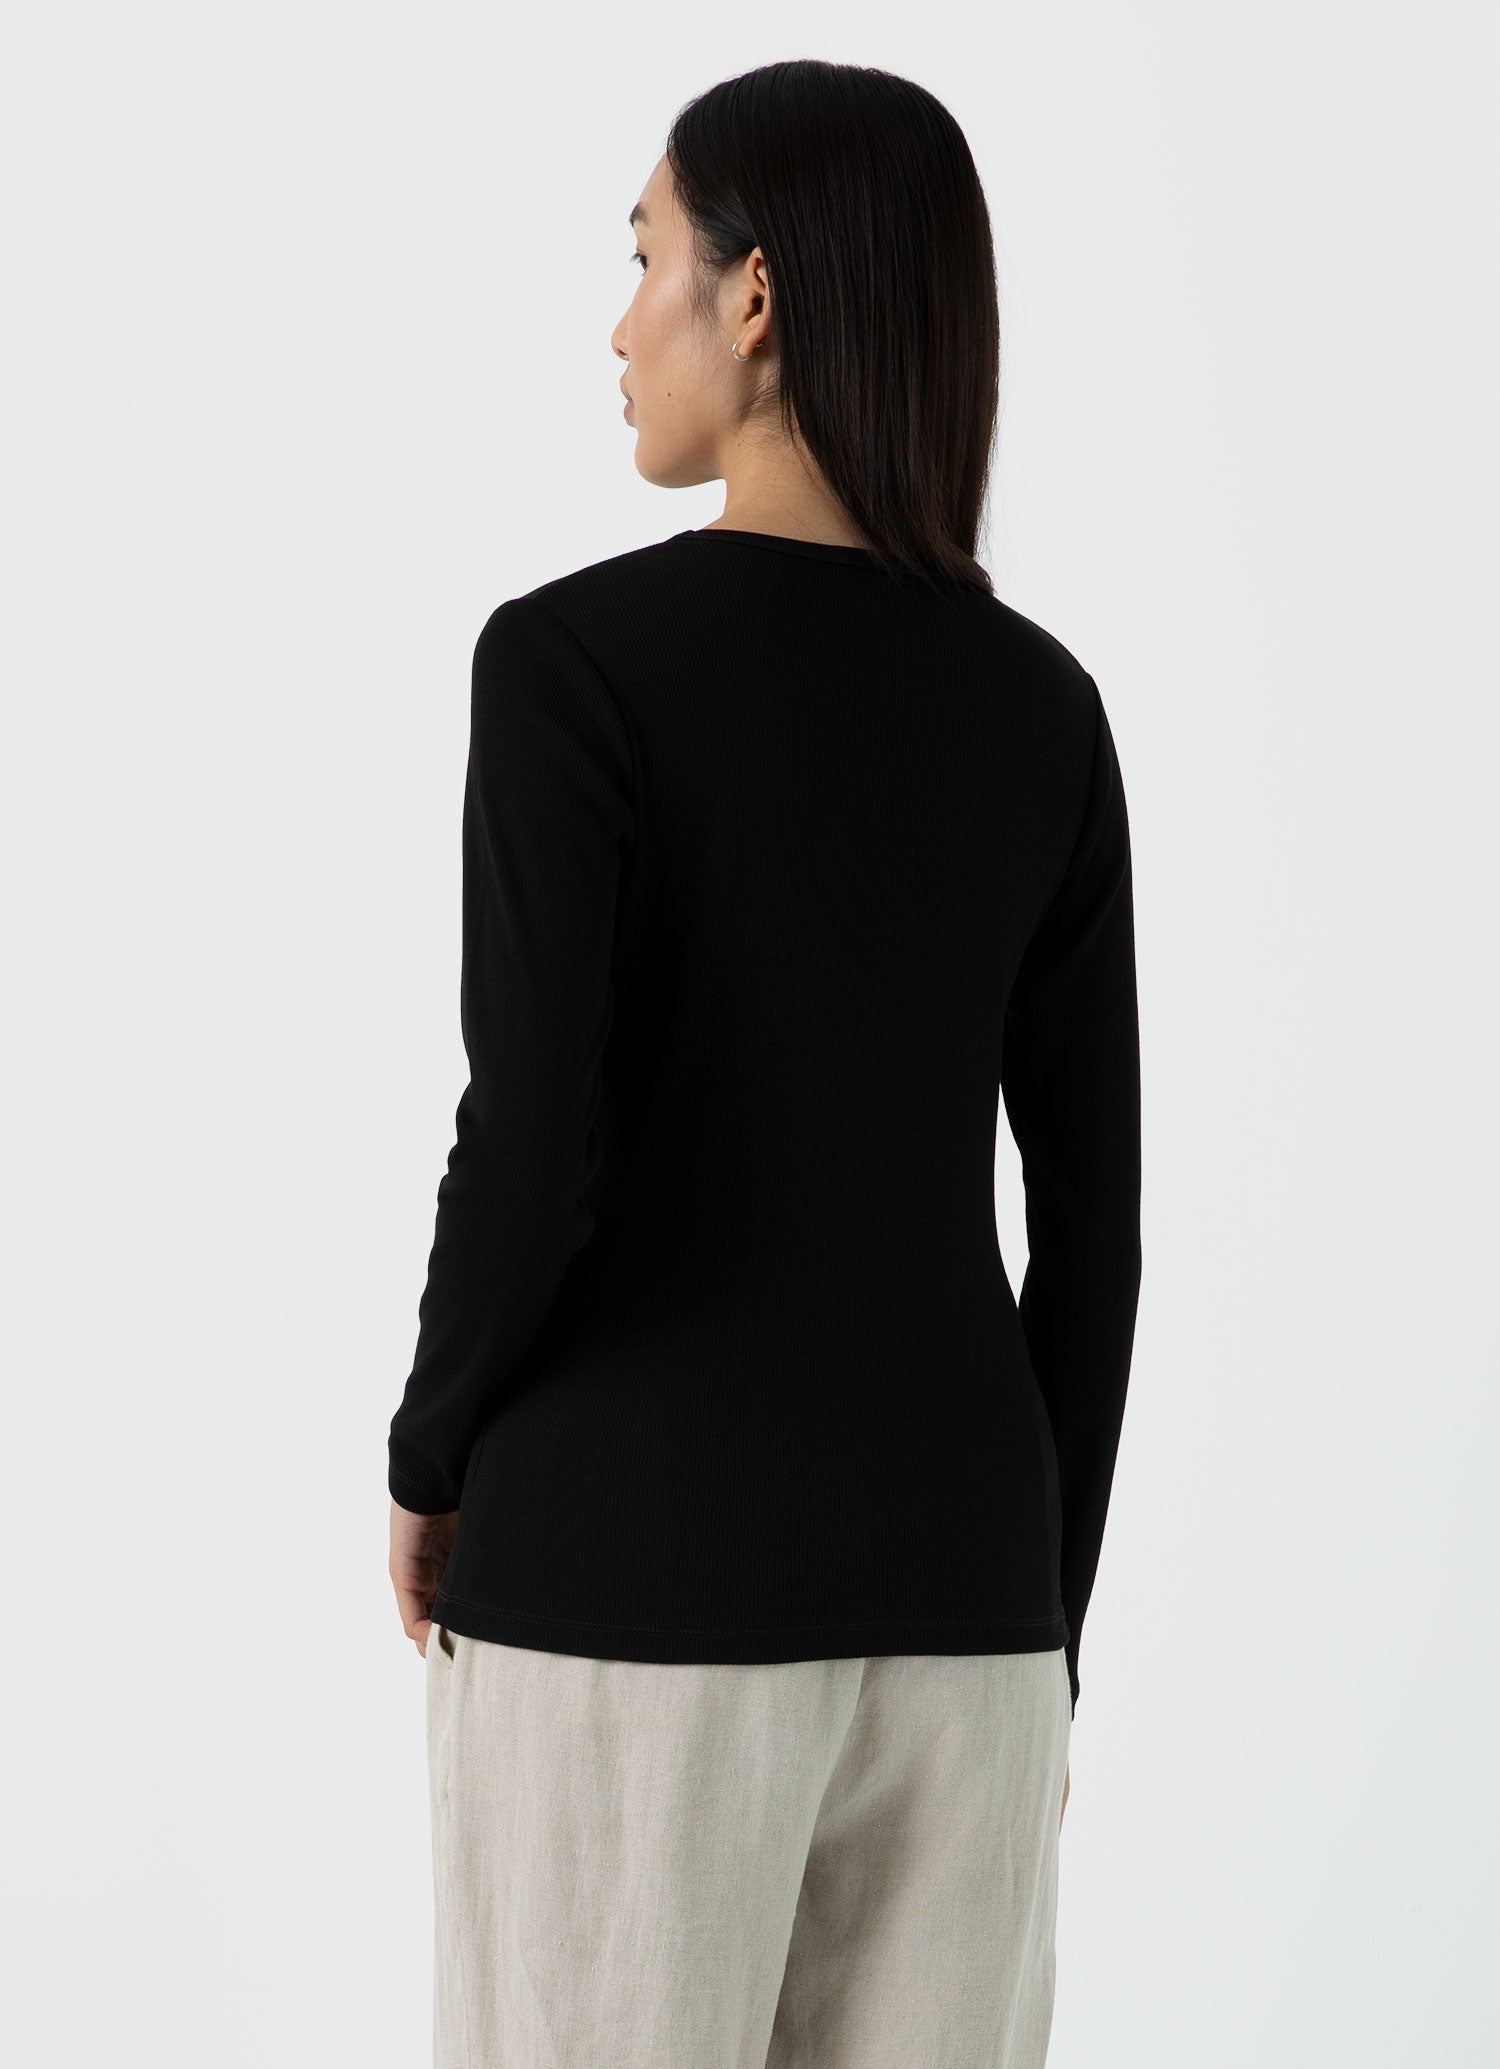 Women's Ribbed Long Sleeve T-shirt in Black